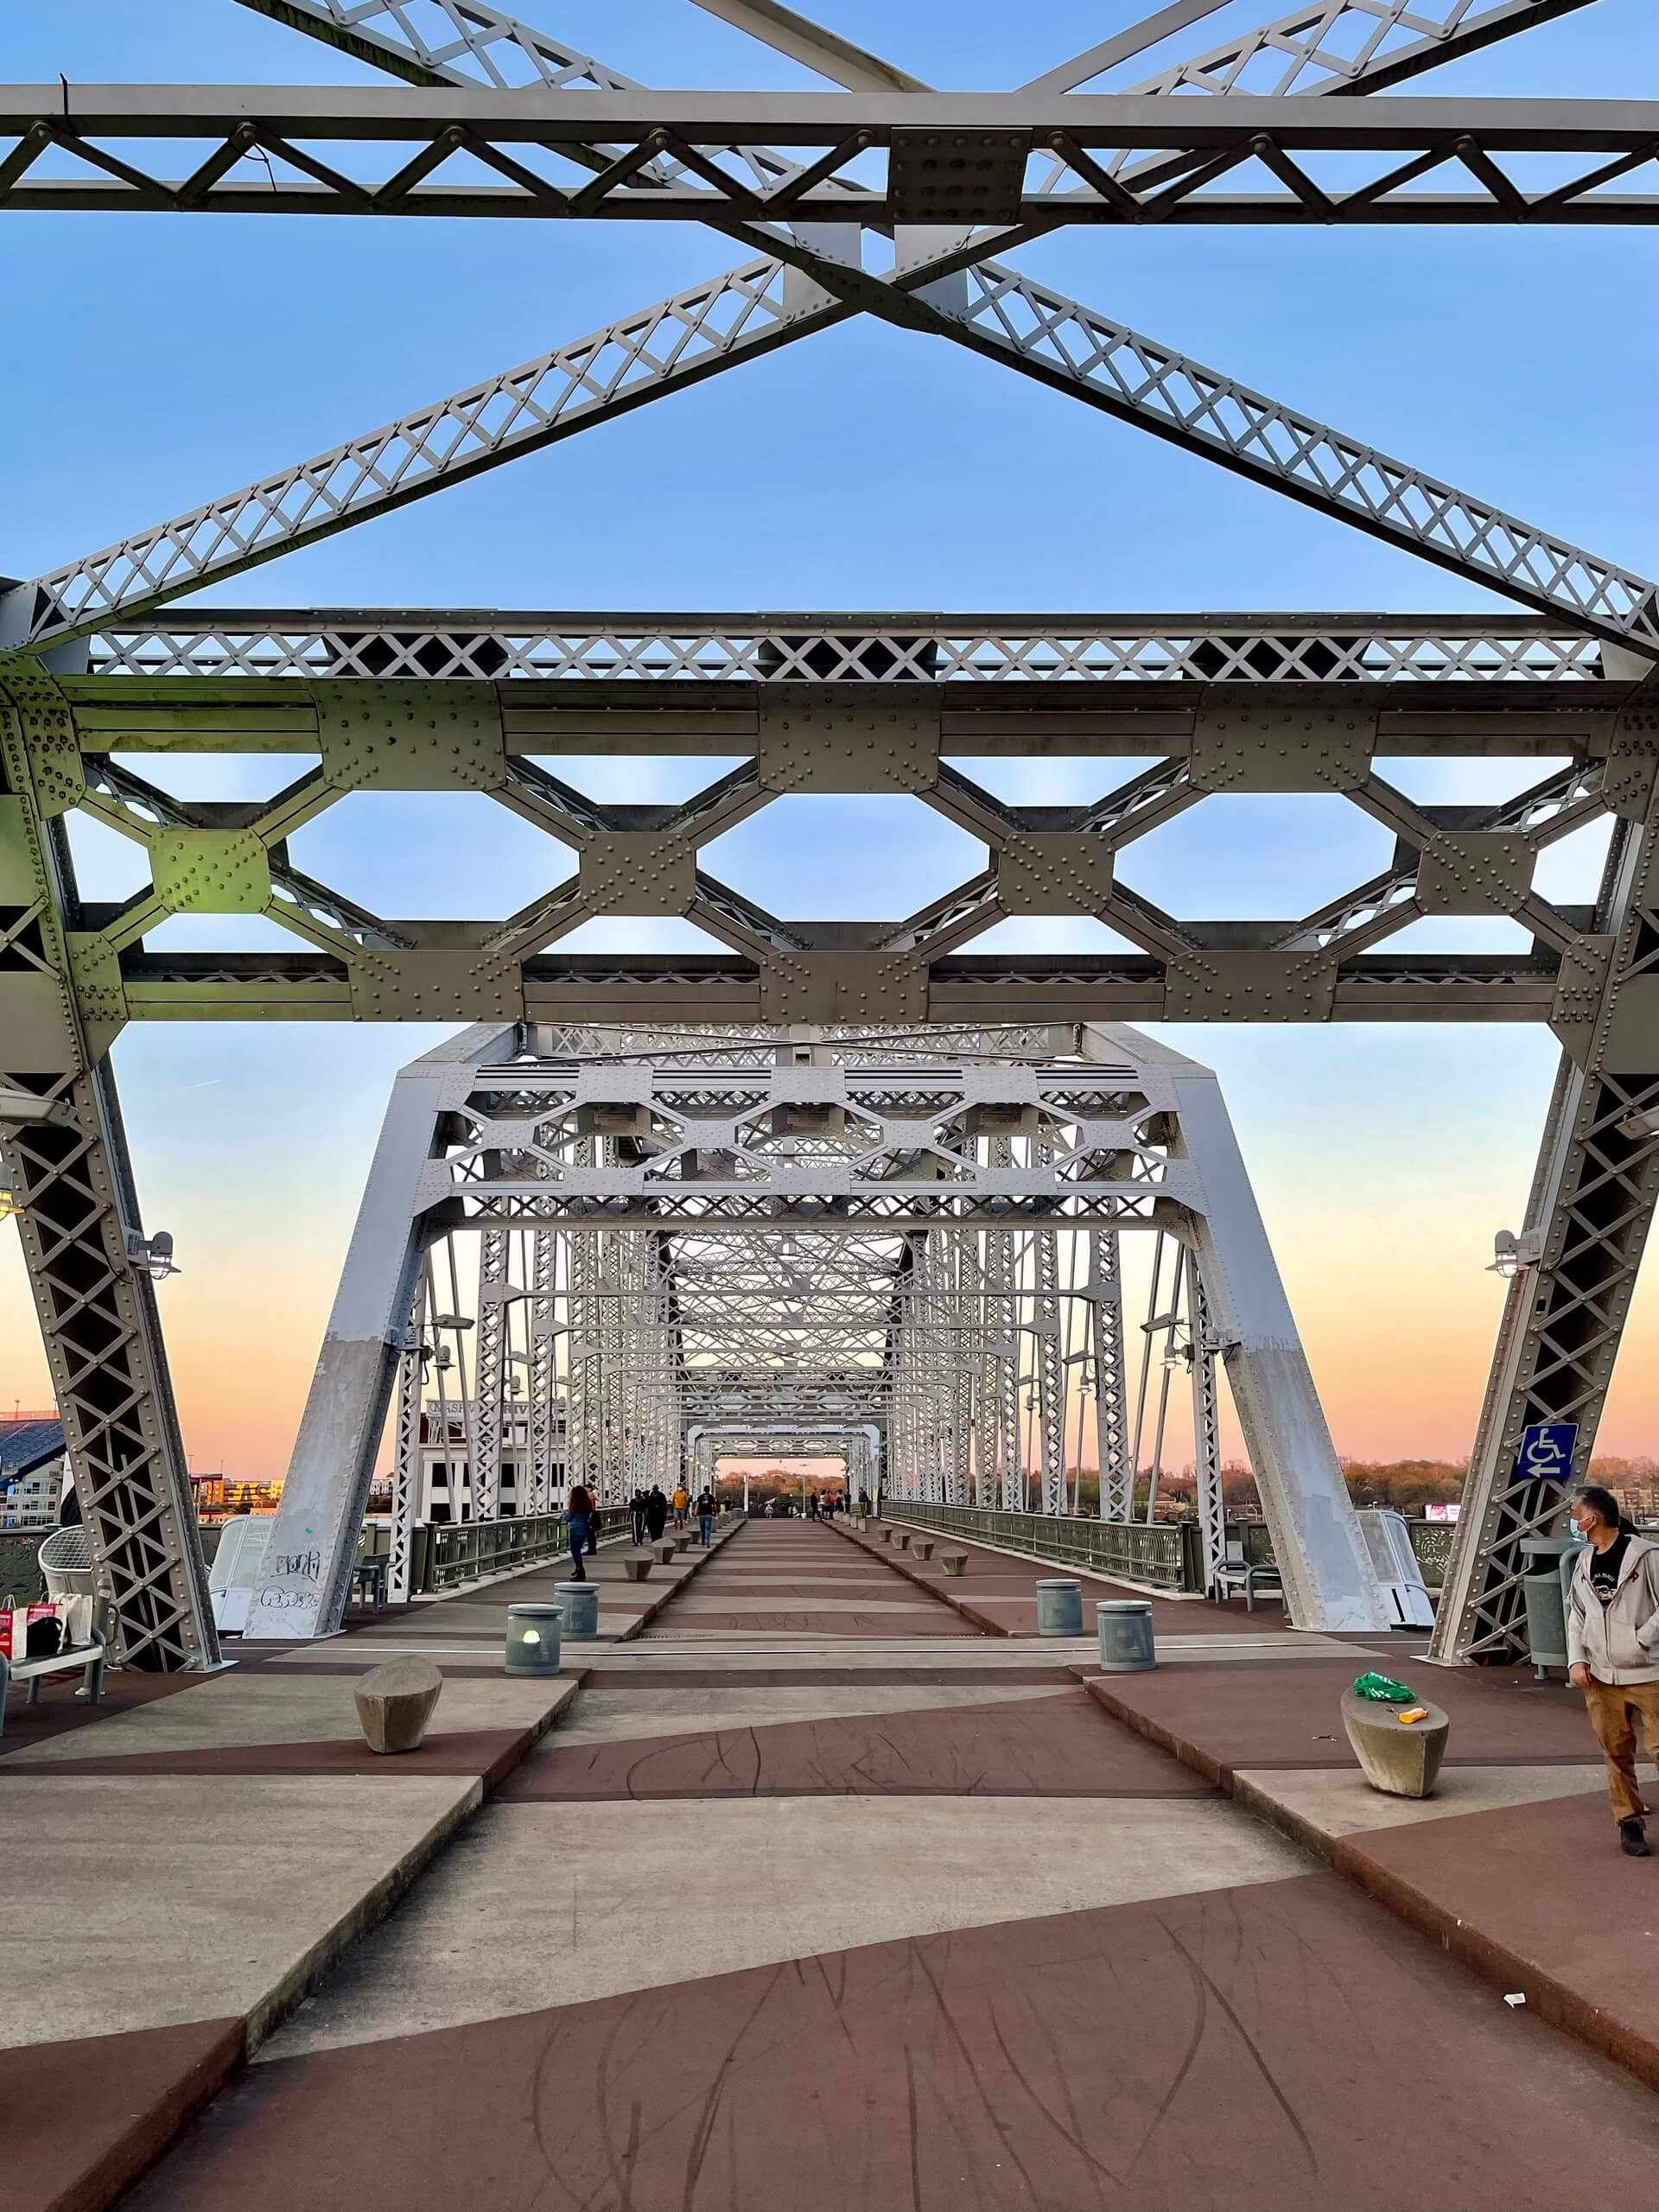 bridge seen while traveling in nashville at sunset